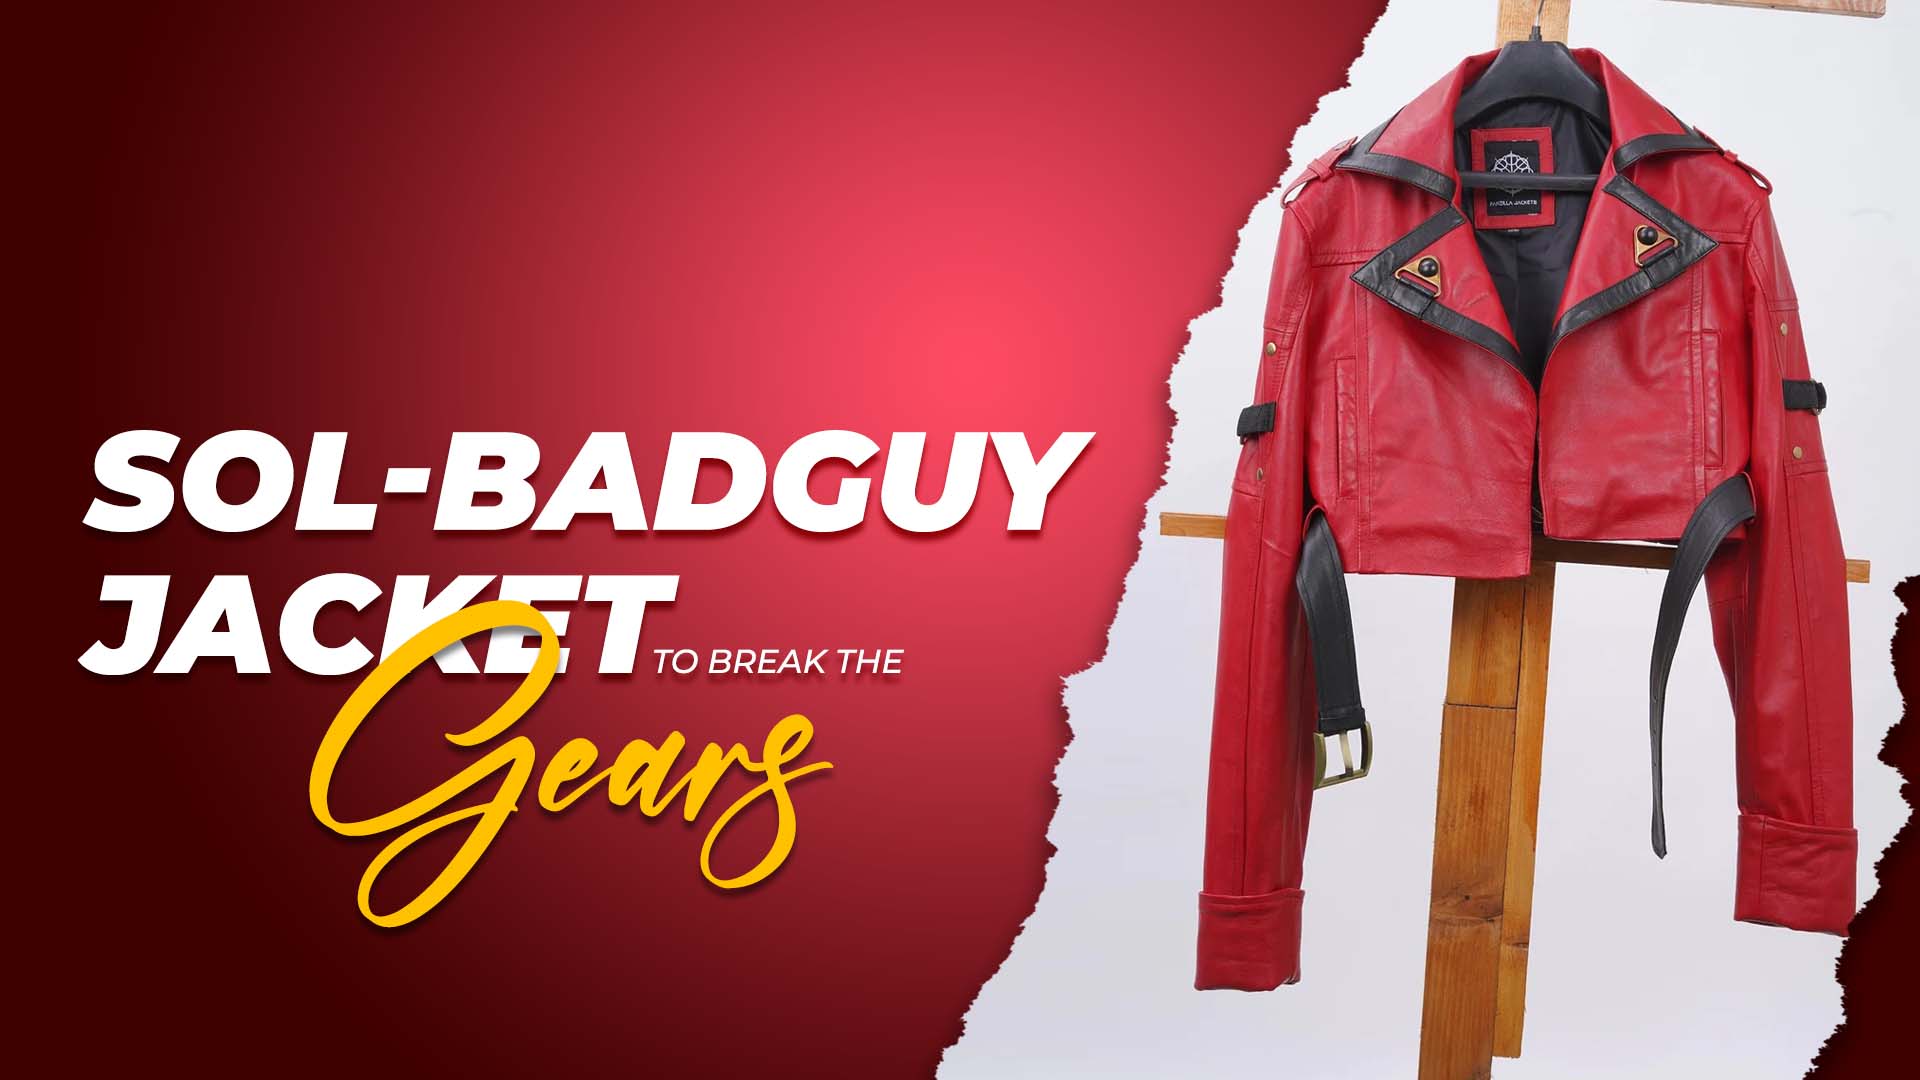 Sol-Badguy Jacket to Break the Gears